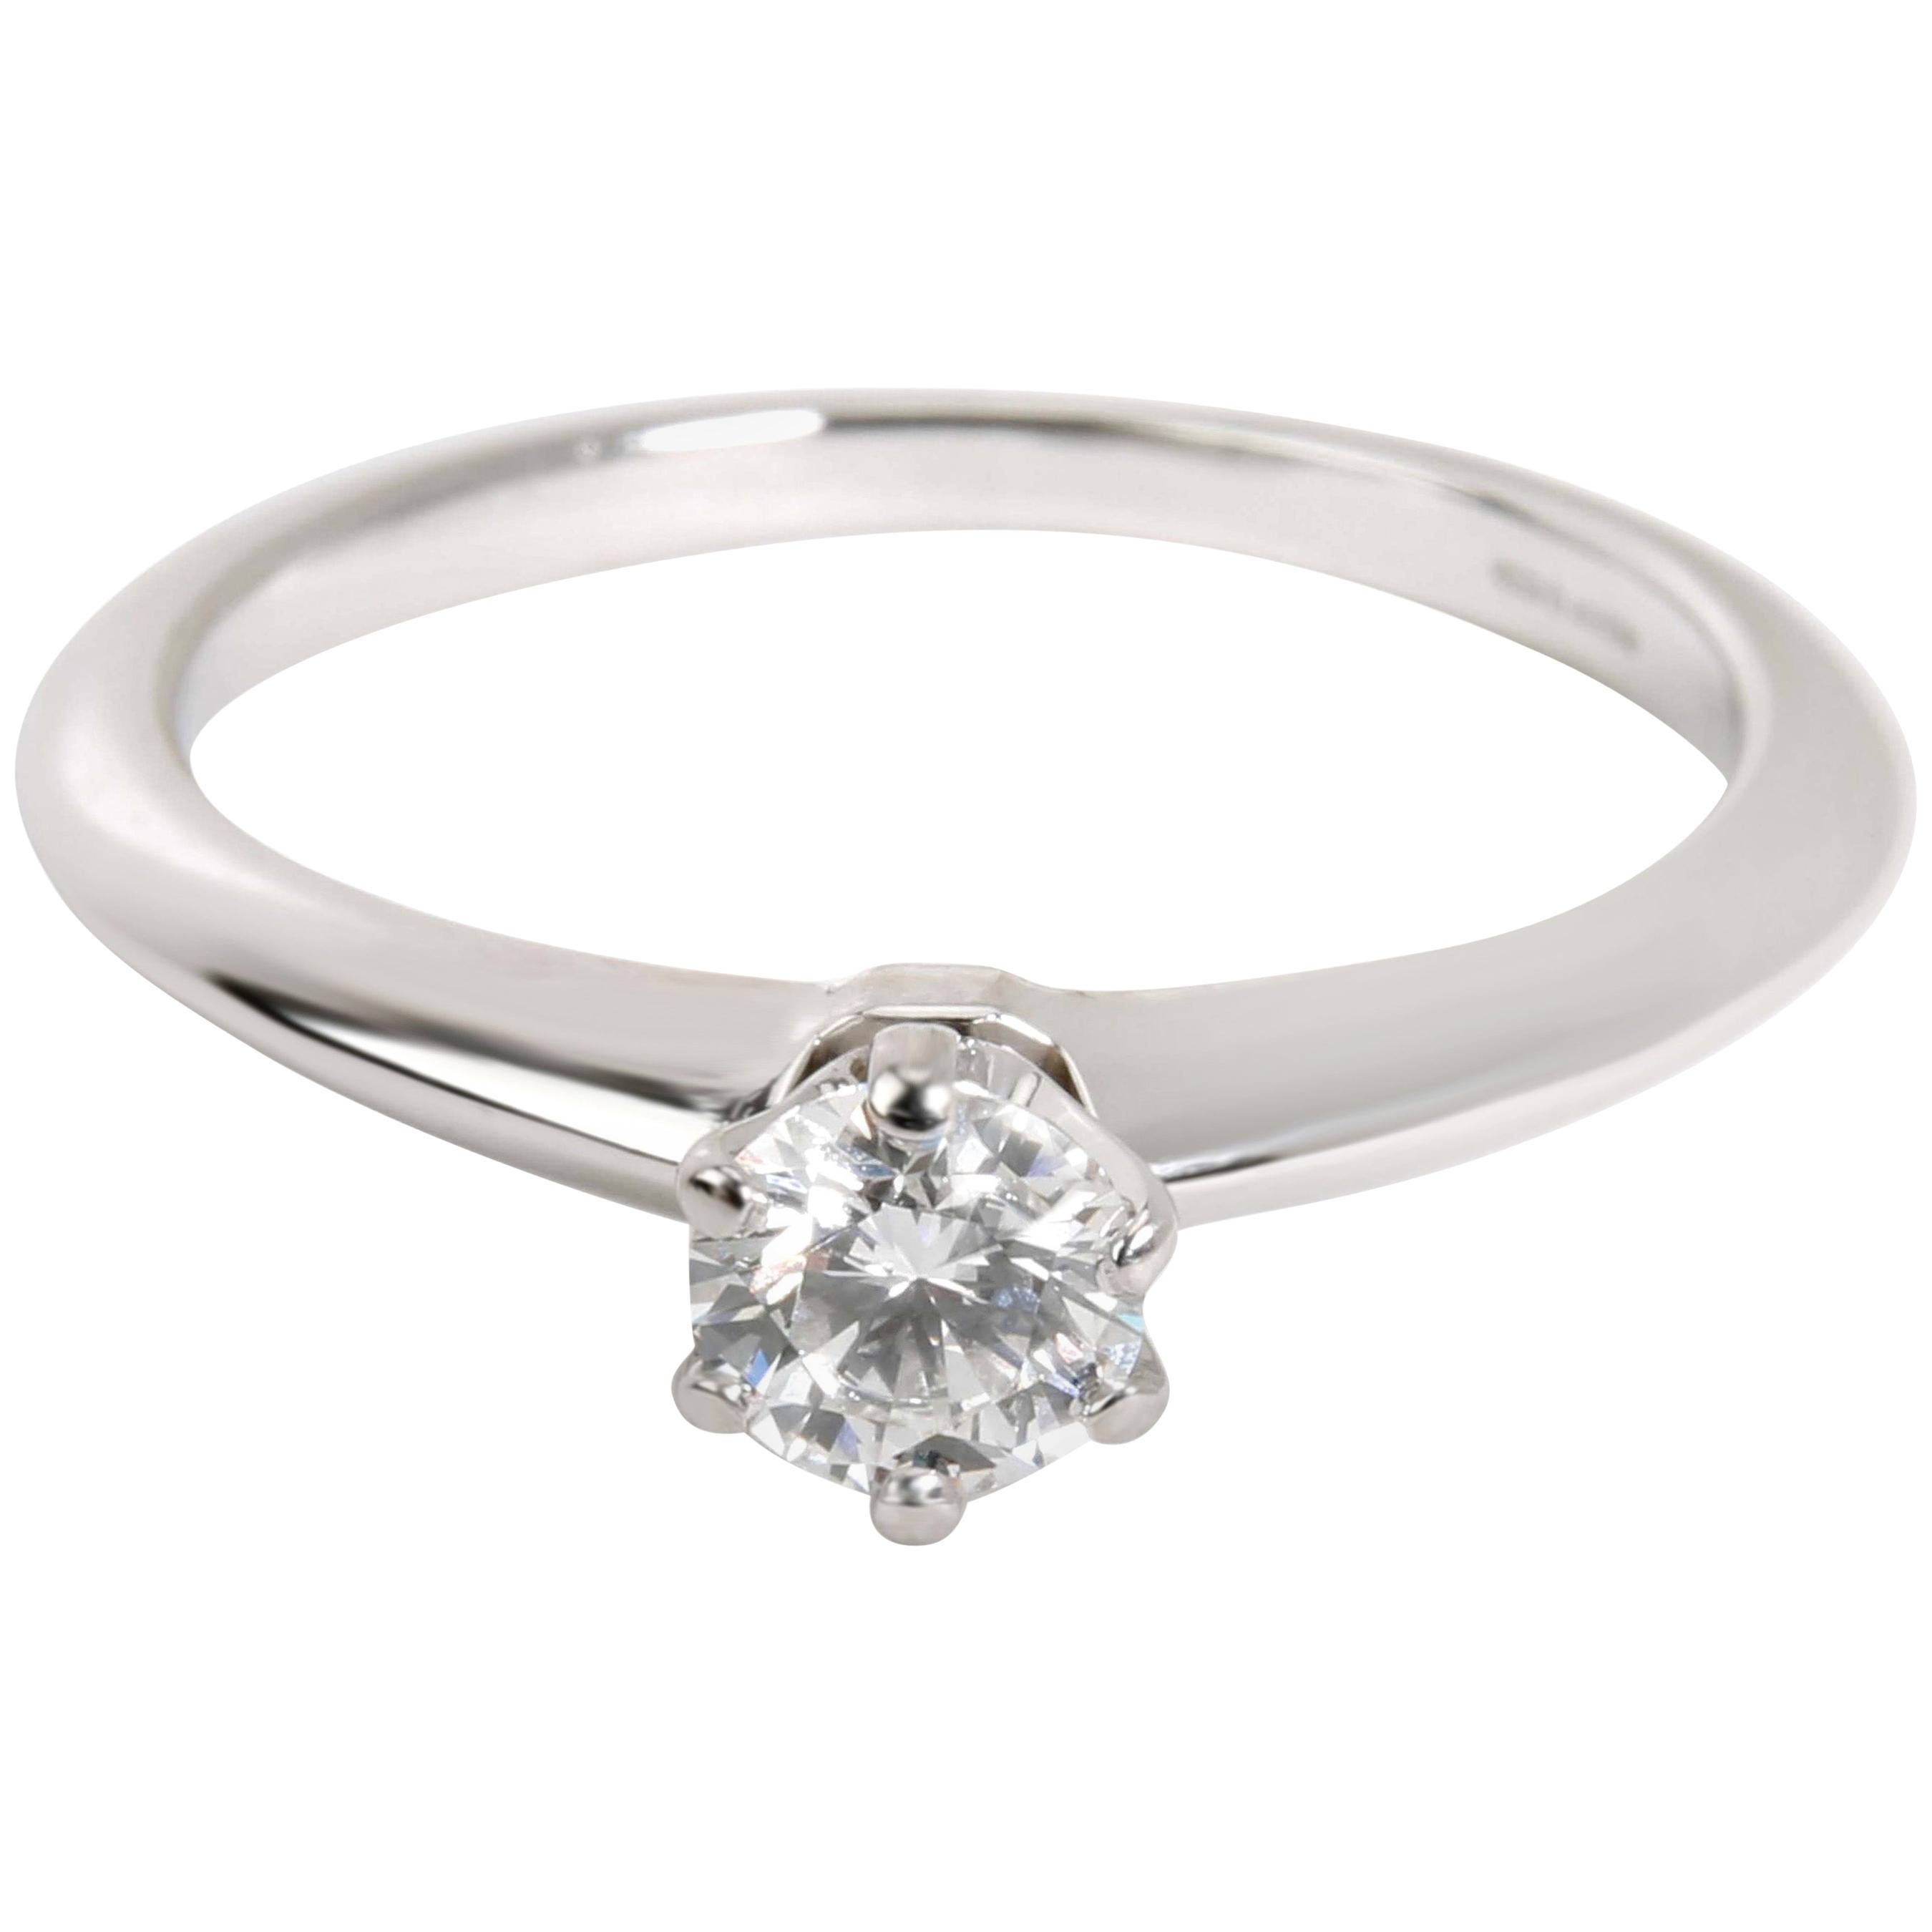 Tiffany & Co. Solitaire Diamond Engagement Ring in Platinum '0.79 Carat I/VVS2'